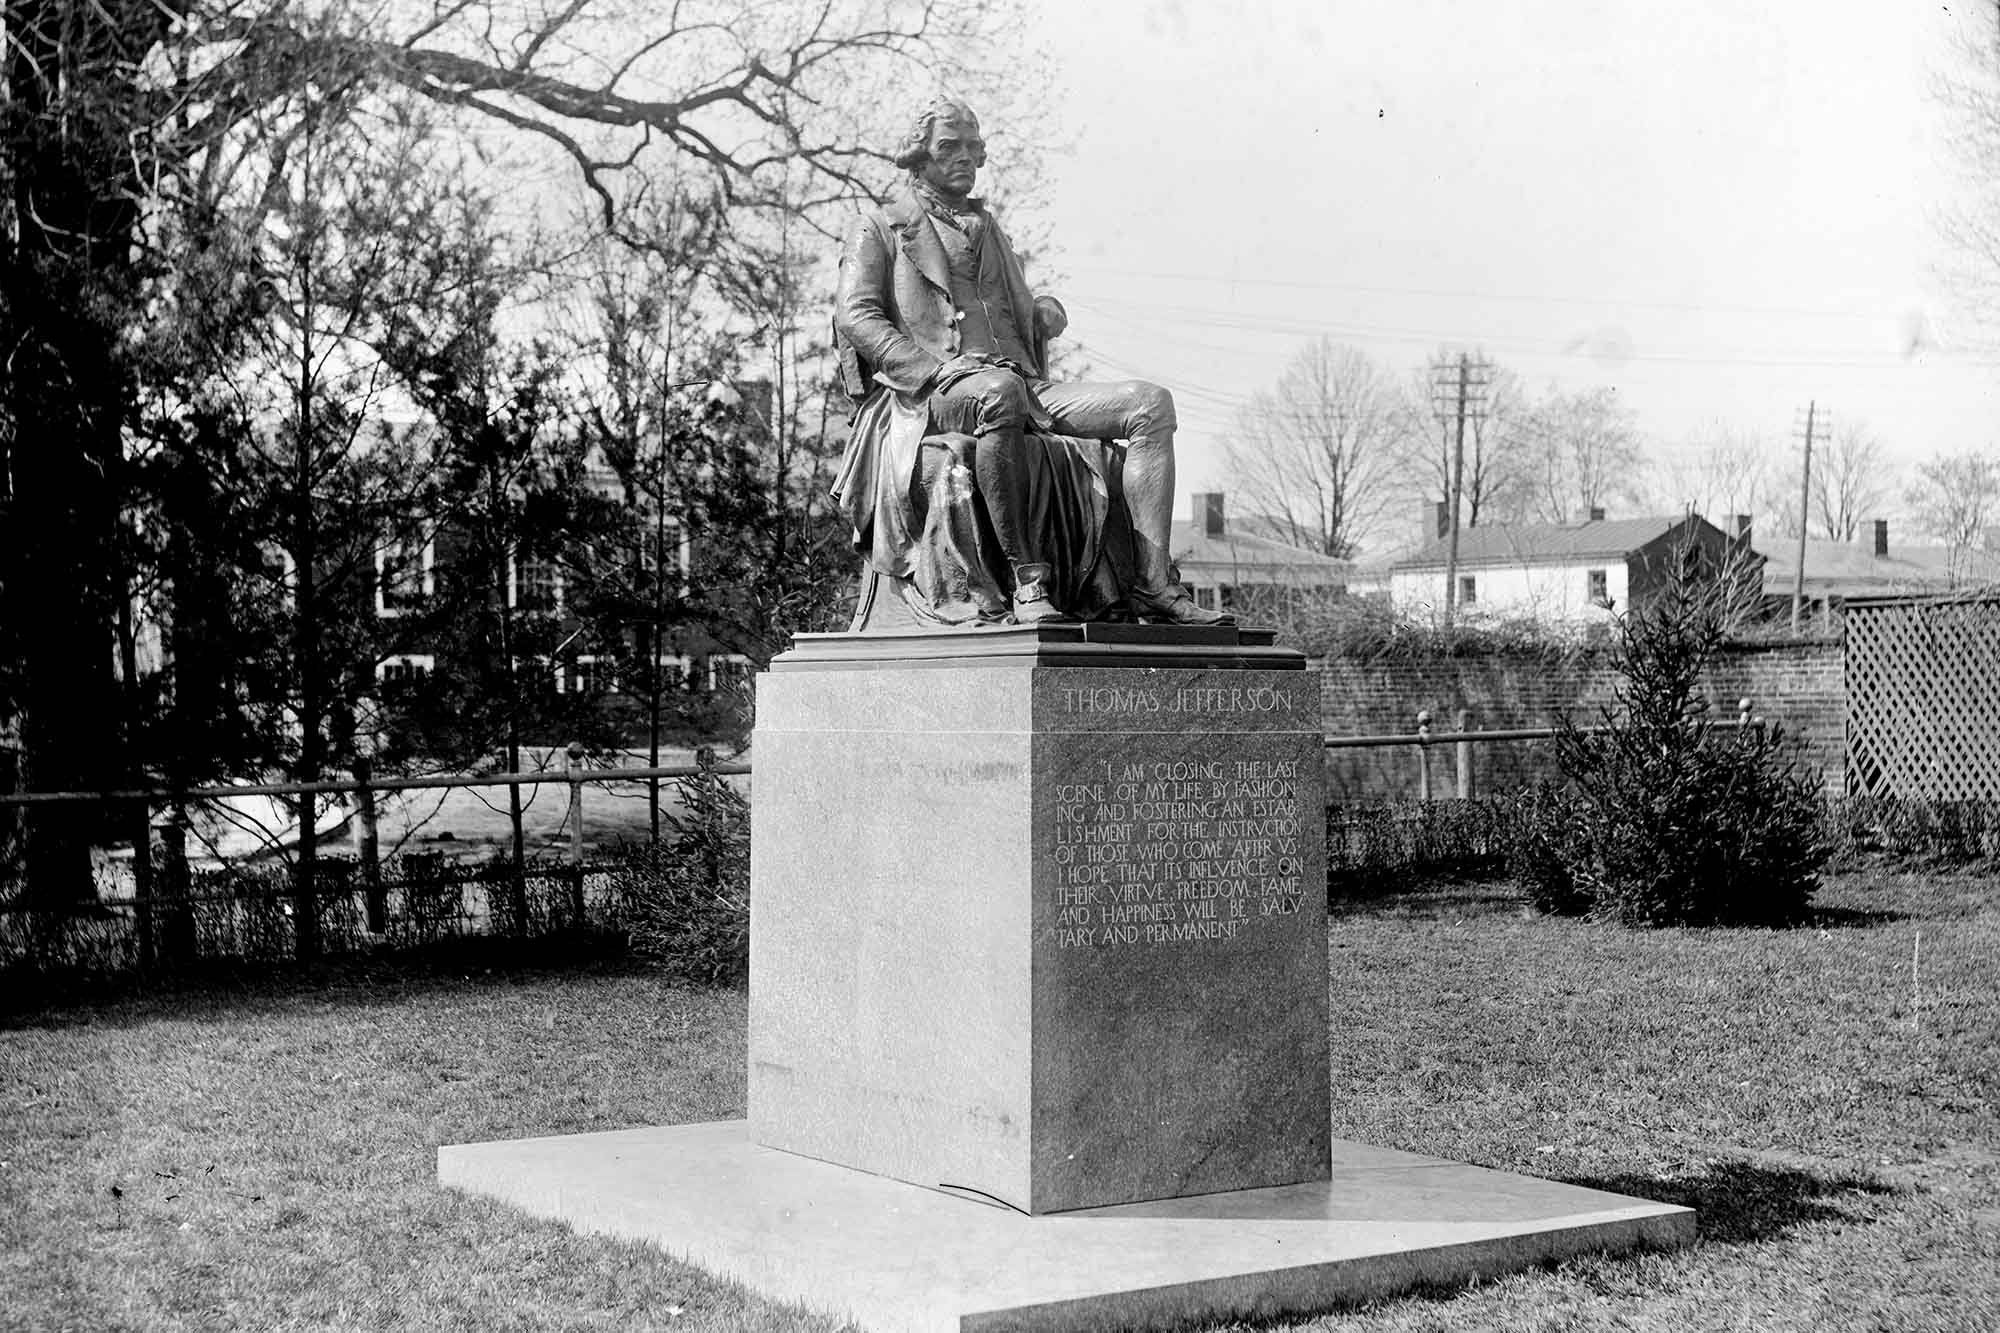 Black and white photo of Thomas Jeffersons statue